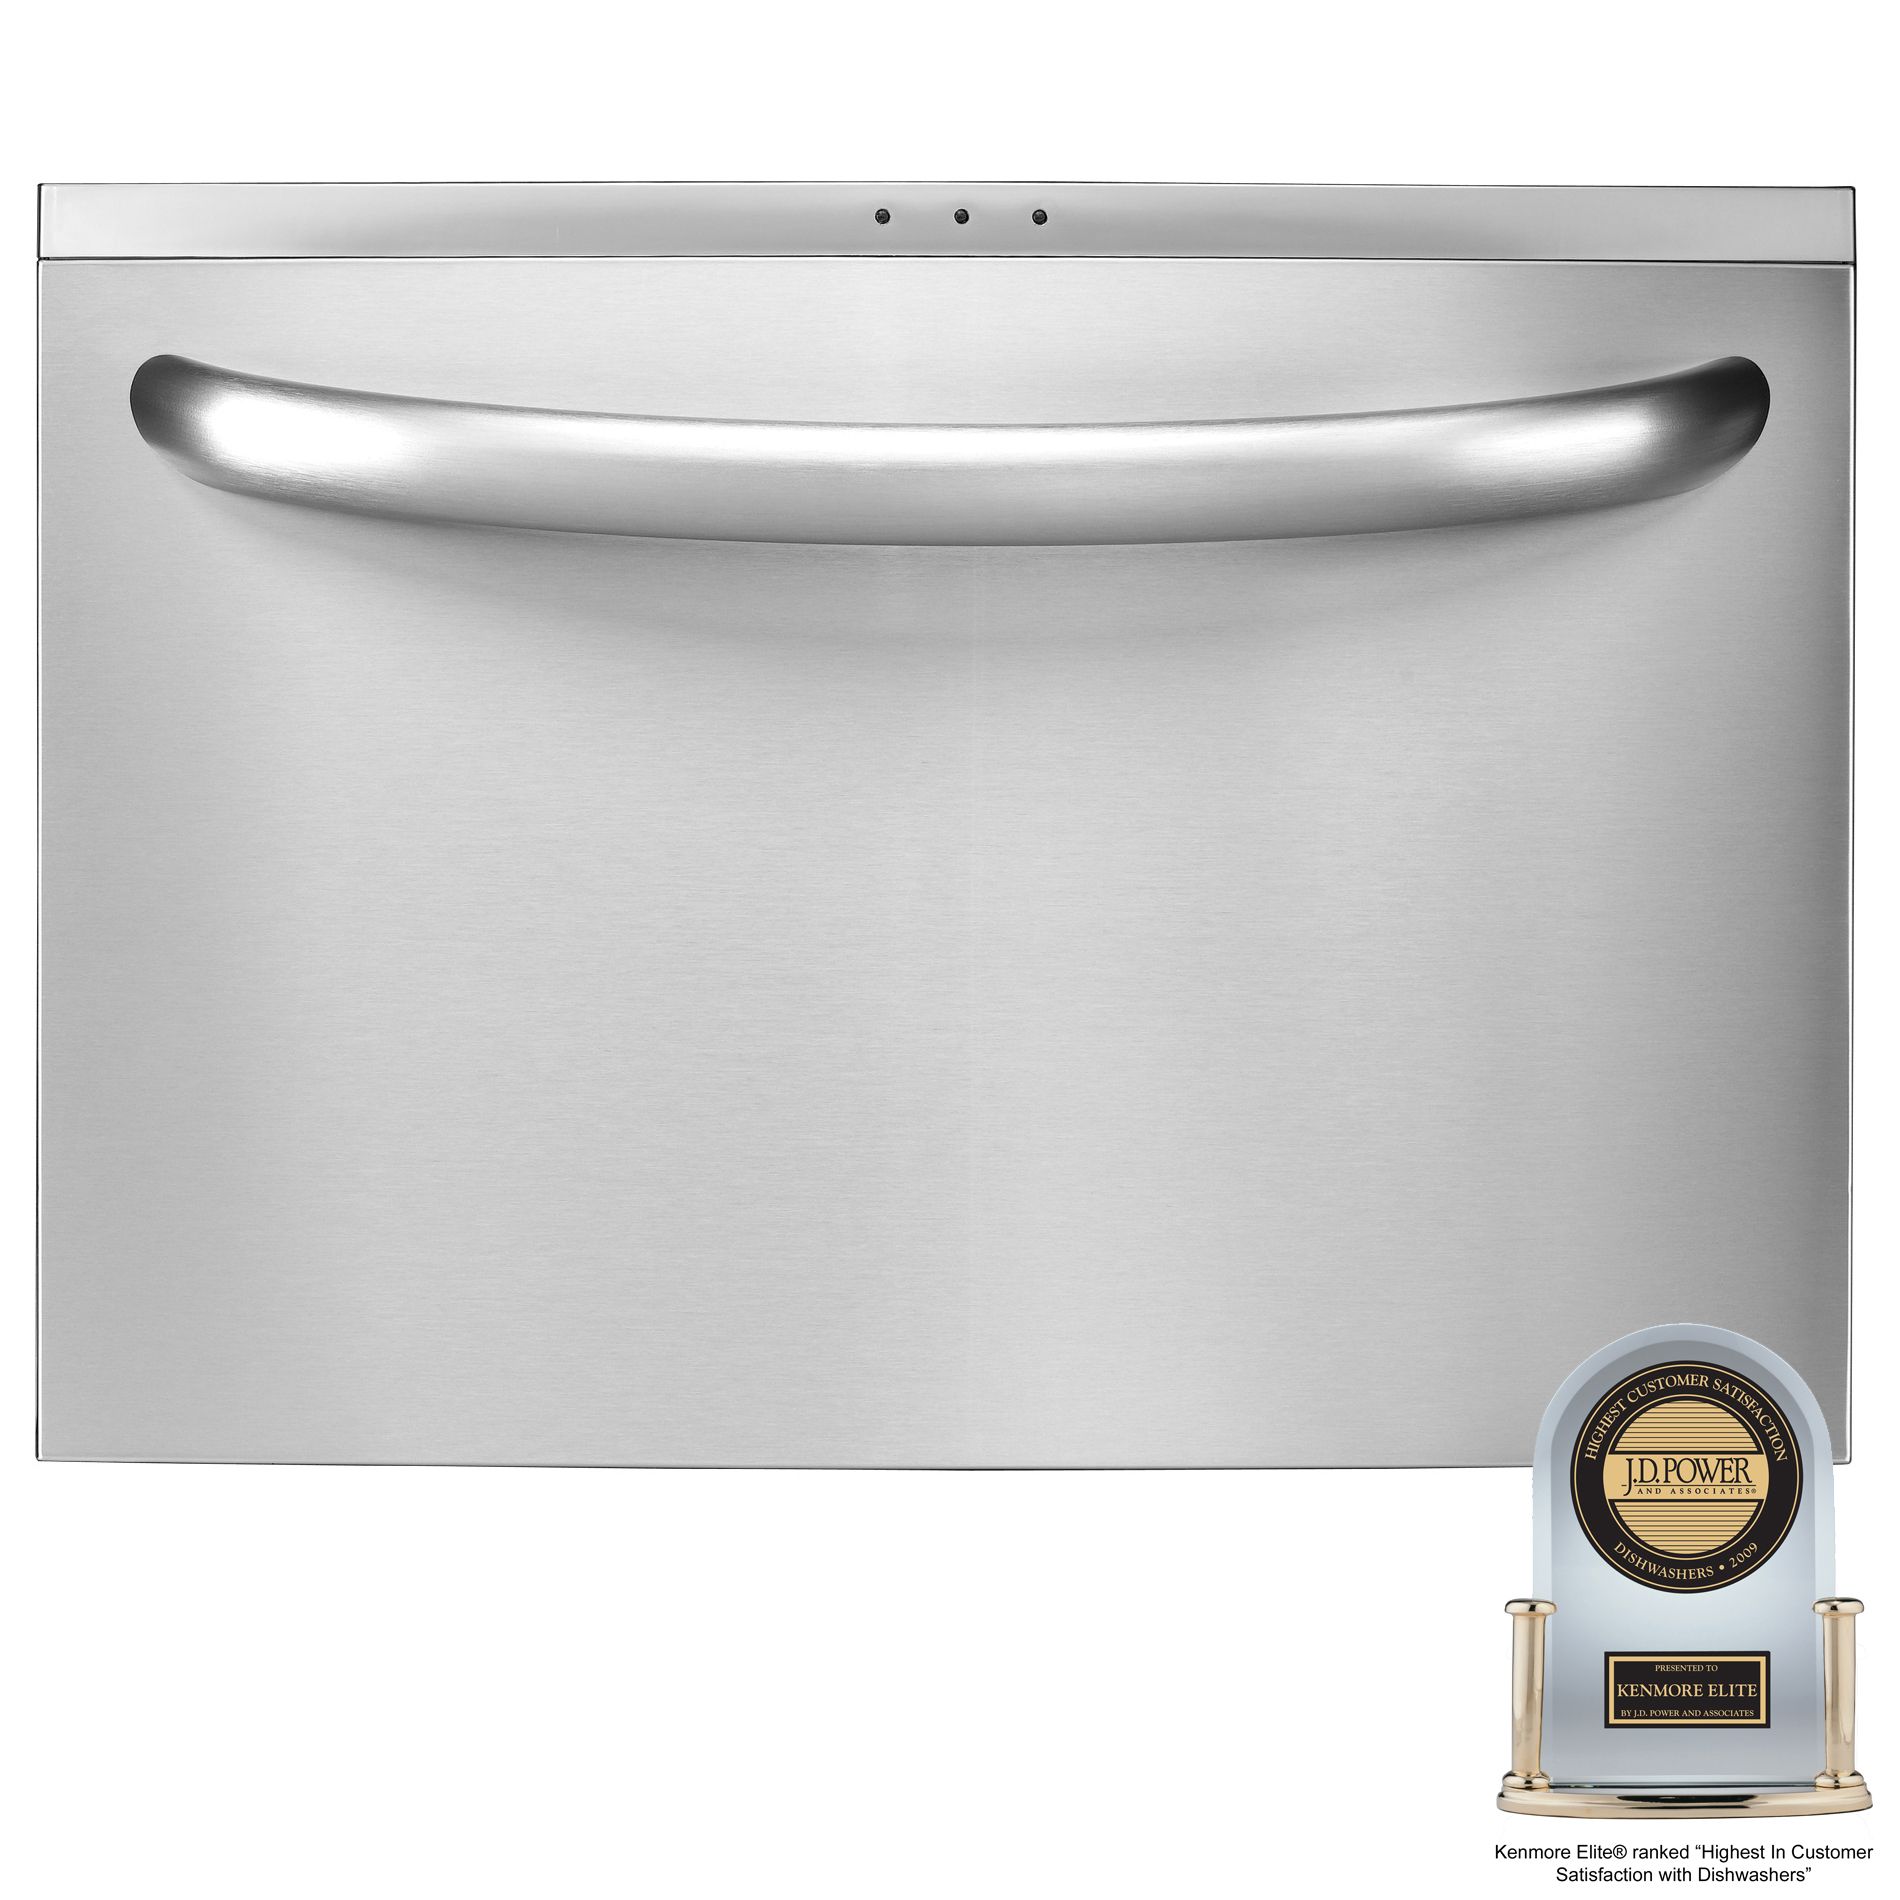 Kenmore Elite 24" Single Drawer Dishwasher with Spin